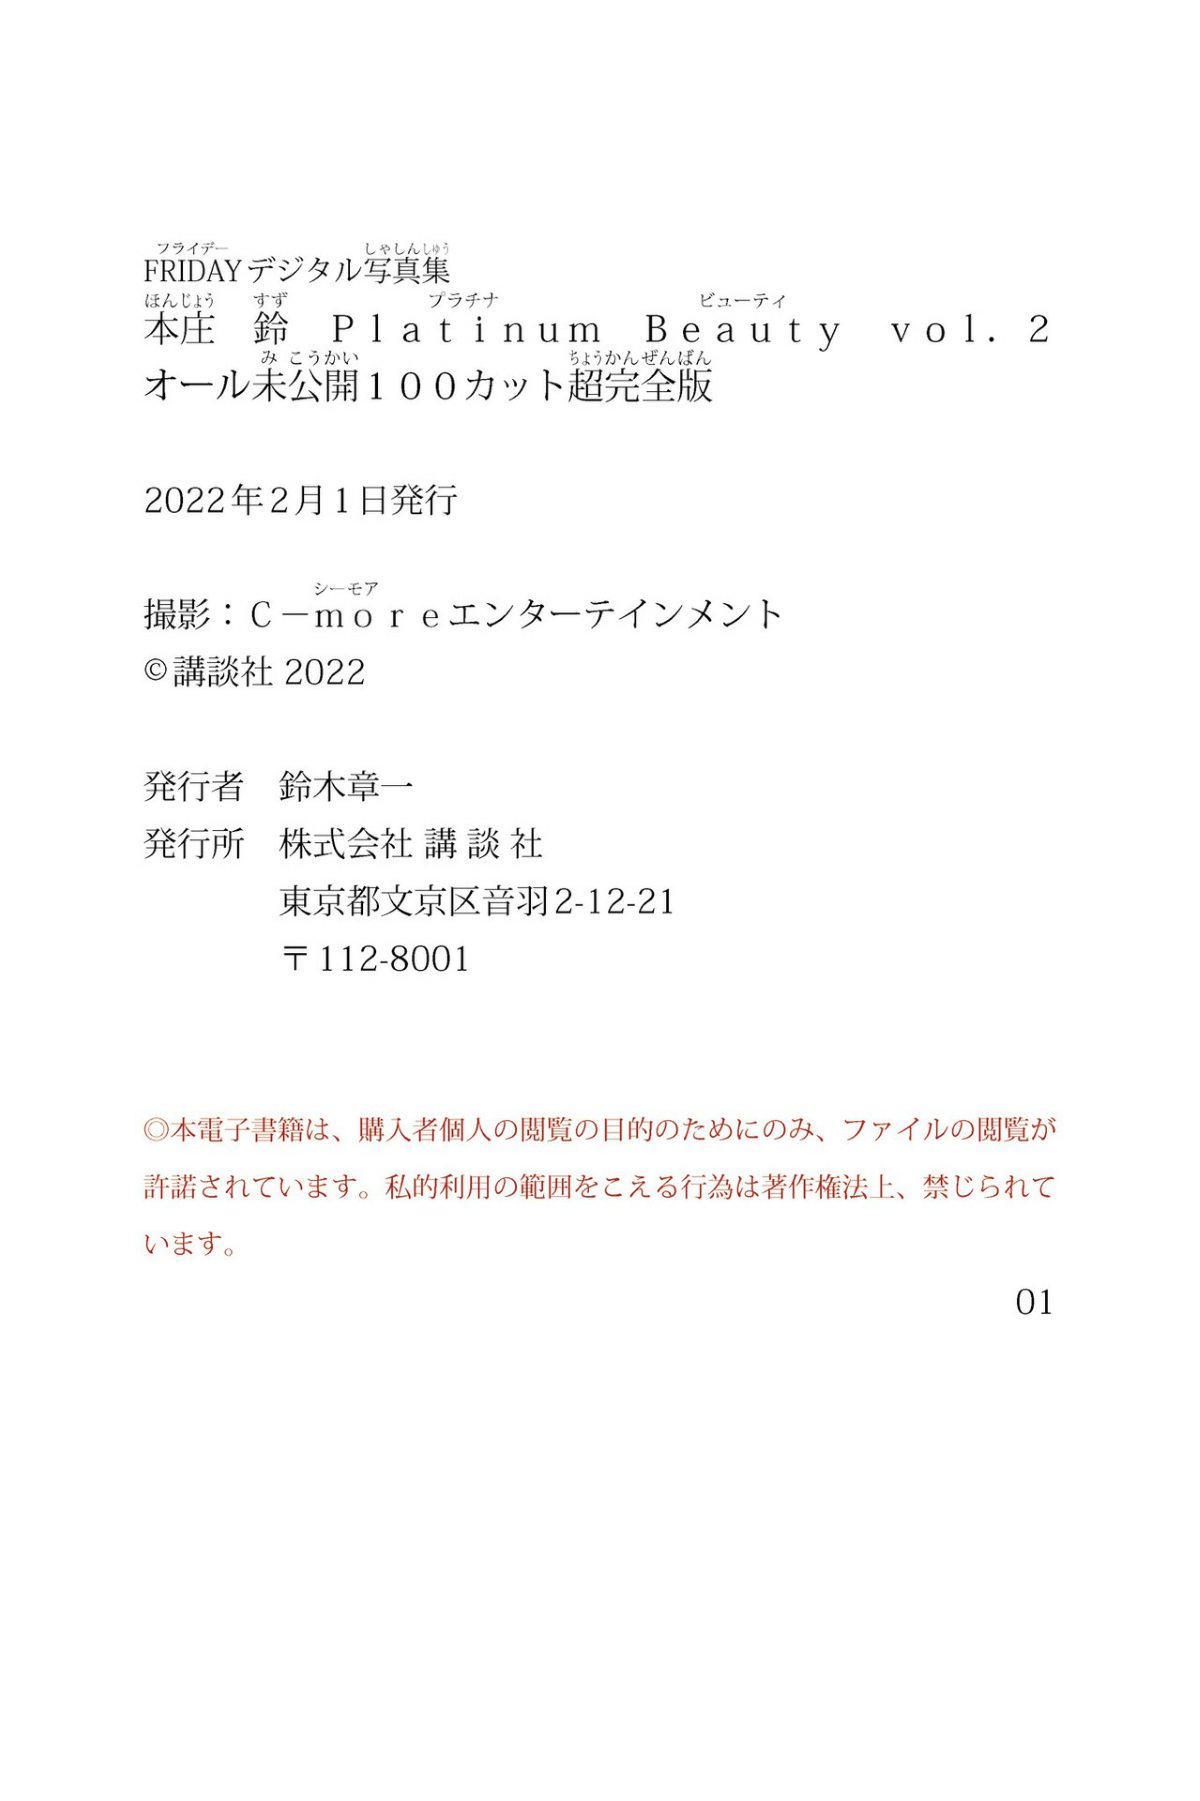 FRIDAY Digital Photobook 2022 01 21 Suzu Honjo 本庄鈴 Platinum Beauty Vol 2 0128 4395618955.jpg